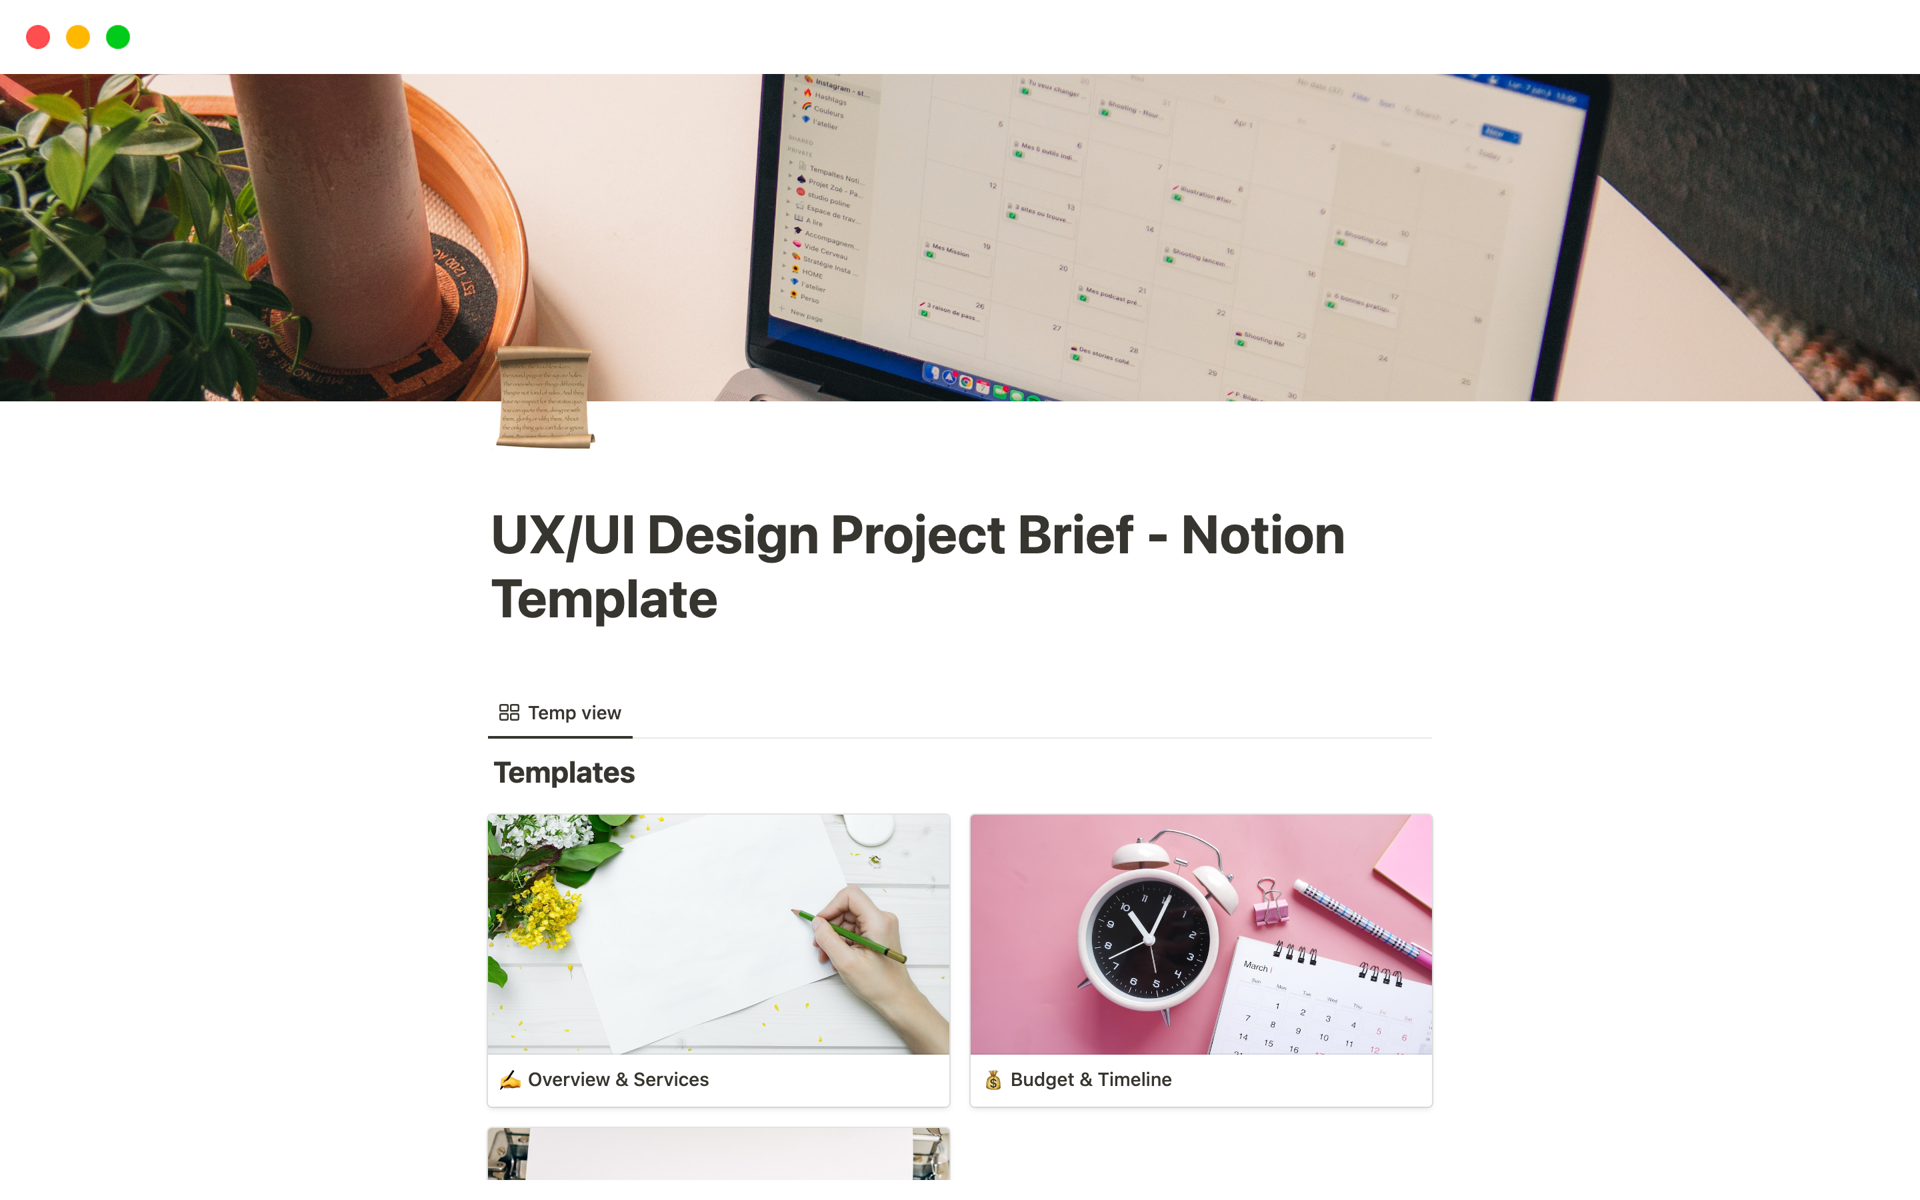 Vista previa de plantilla para UX/UI Design Project Brief